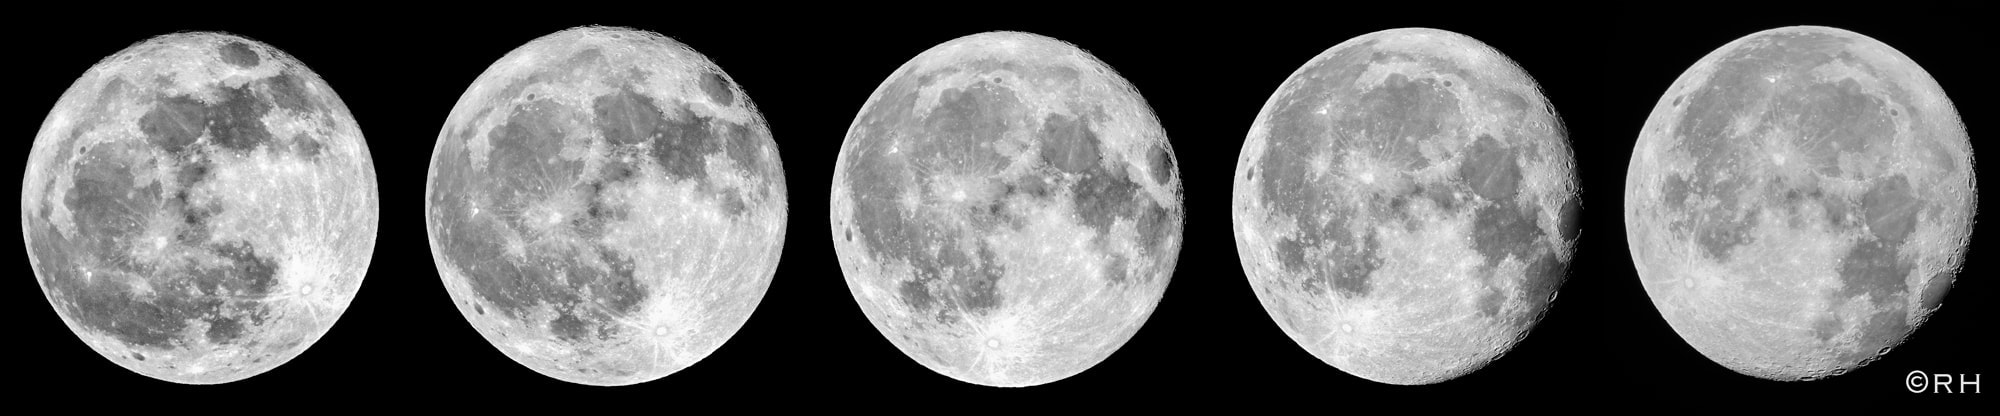 night sky normal lunar rotation images by Rick Hemi